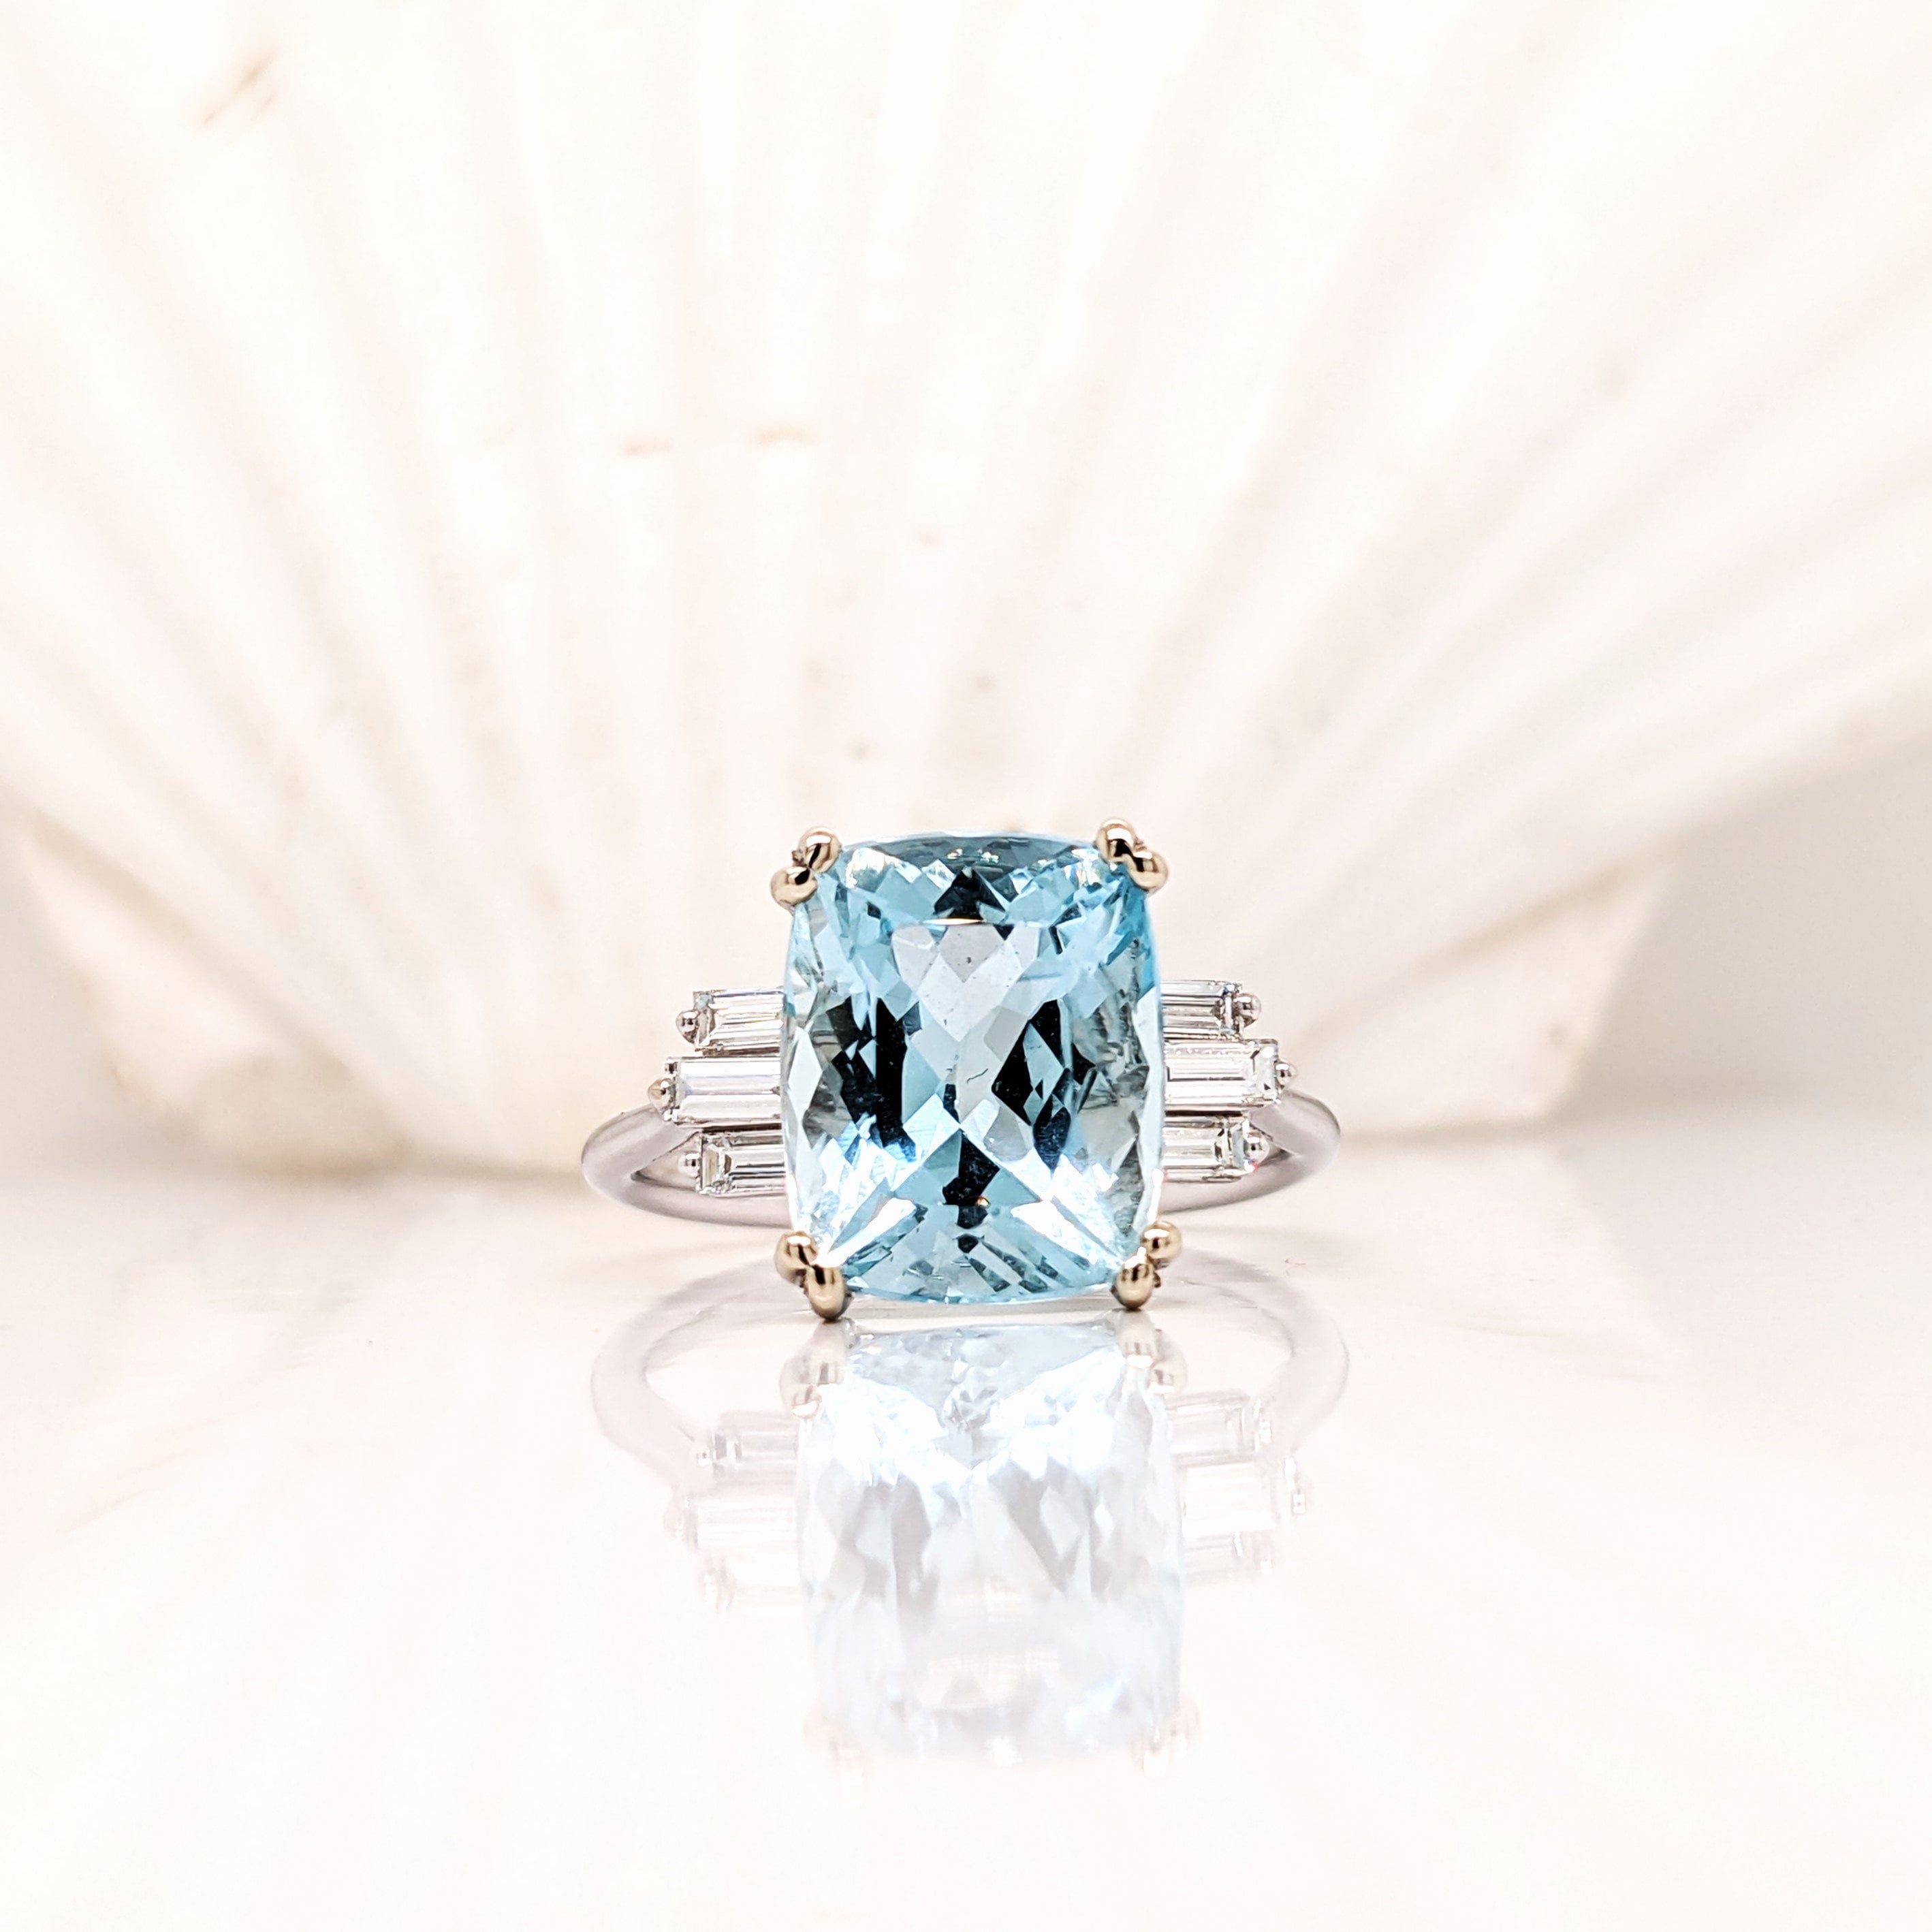 Aqua Blue Natural Aquamarine Ring in 14k Gold w Baguette Diamond Accents | Emerald Cut 10x8mm | Modern Style | March Birthstone | Statement